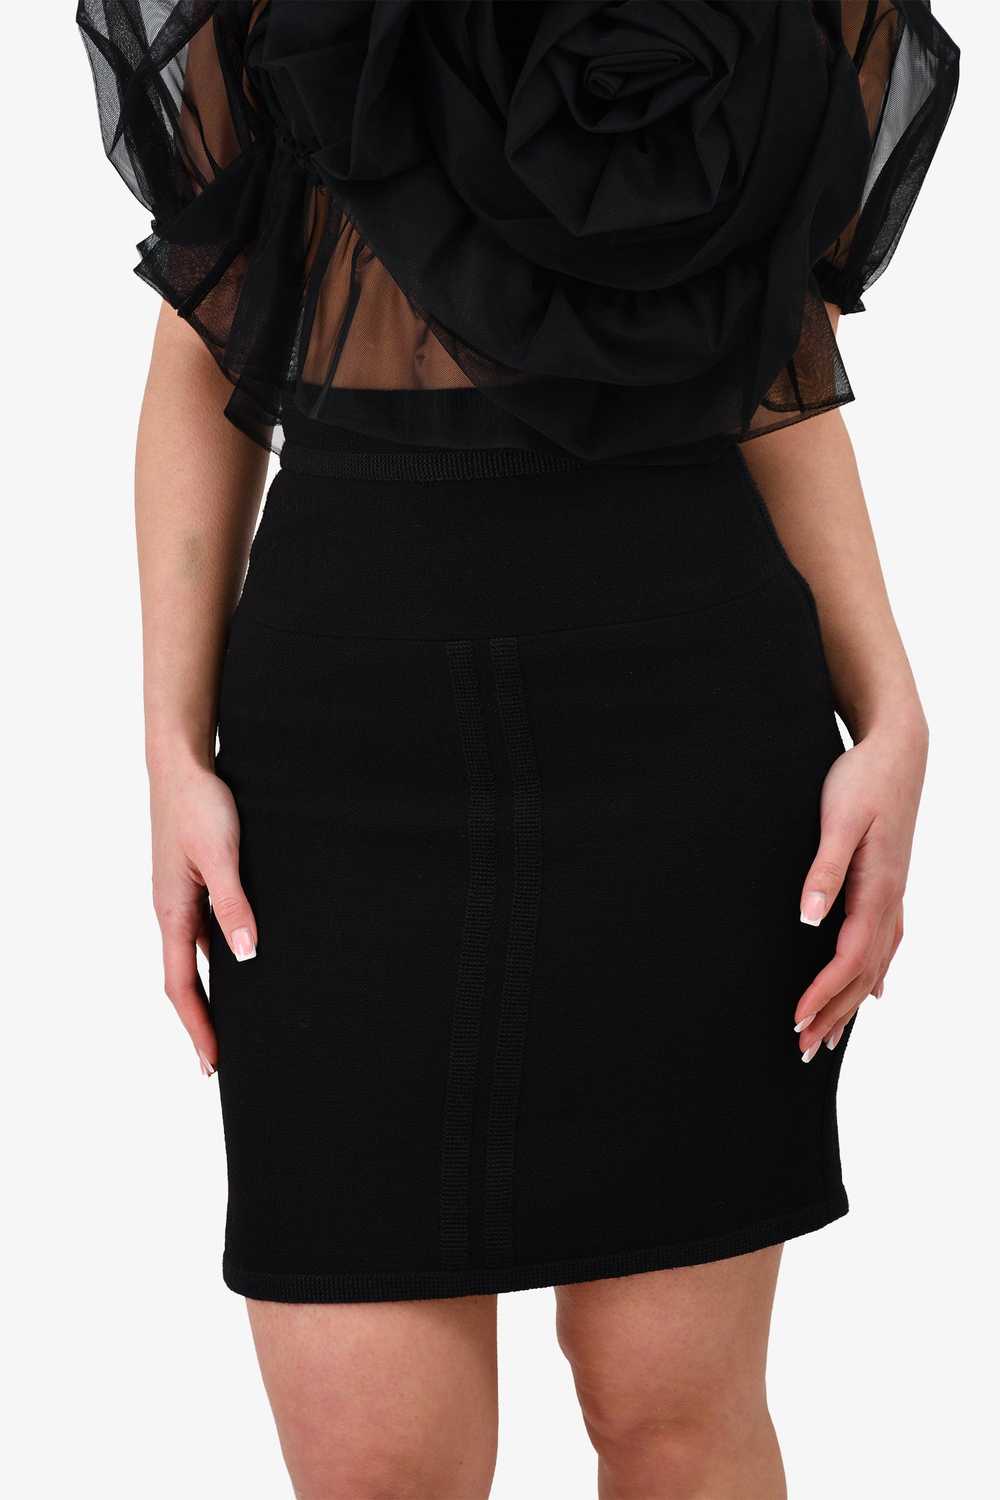 Pre-Loved Chanel™ Black Wool Knee Length Skirt Si… - image 1